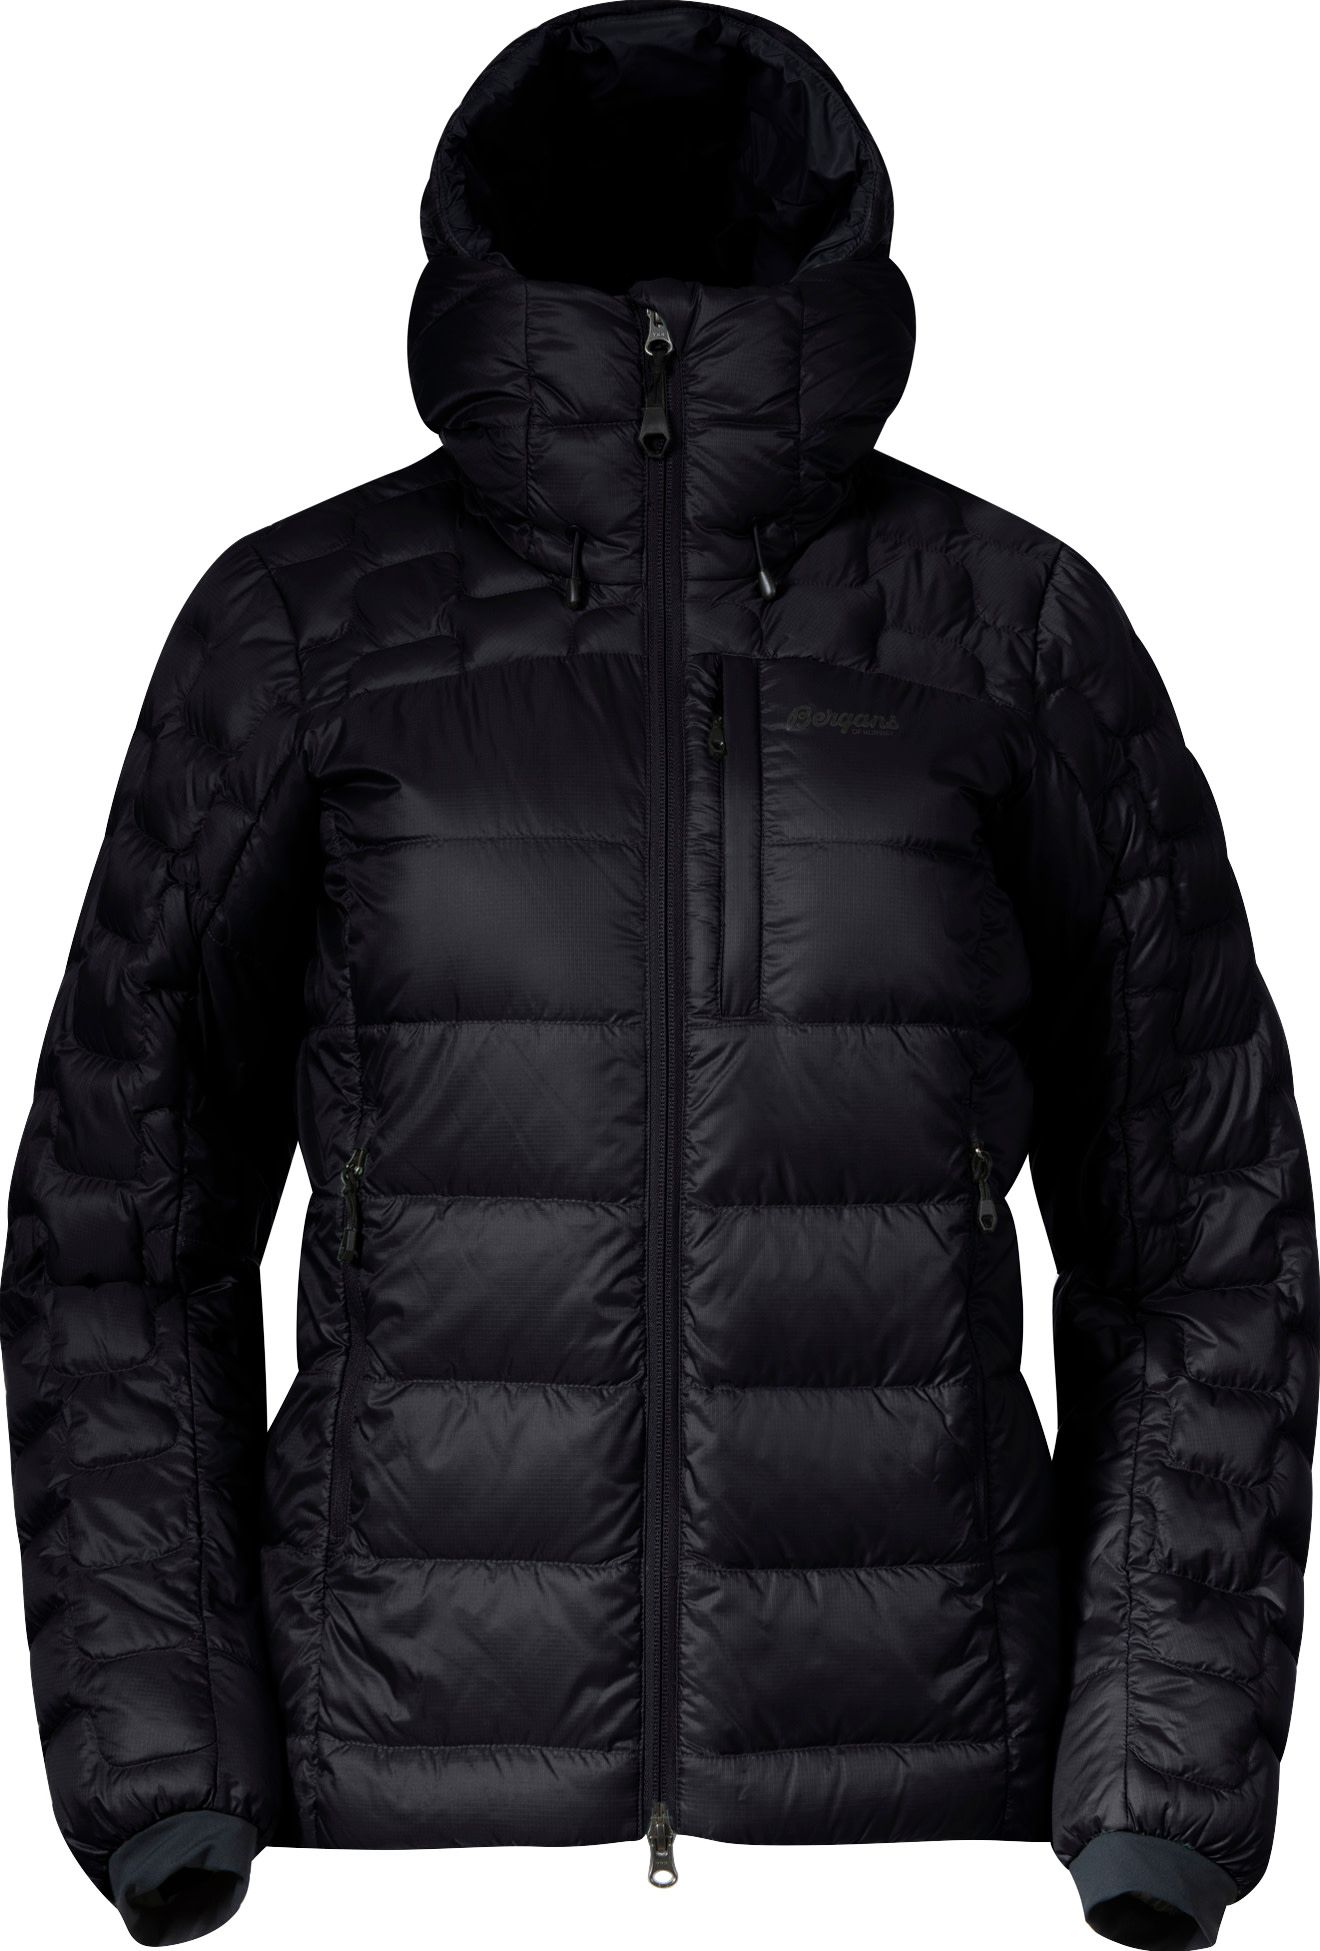 Bergans Women's Magma Medium Down Jacket With Hood Black